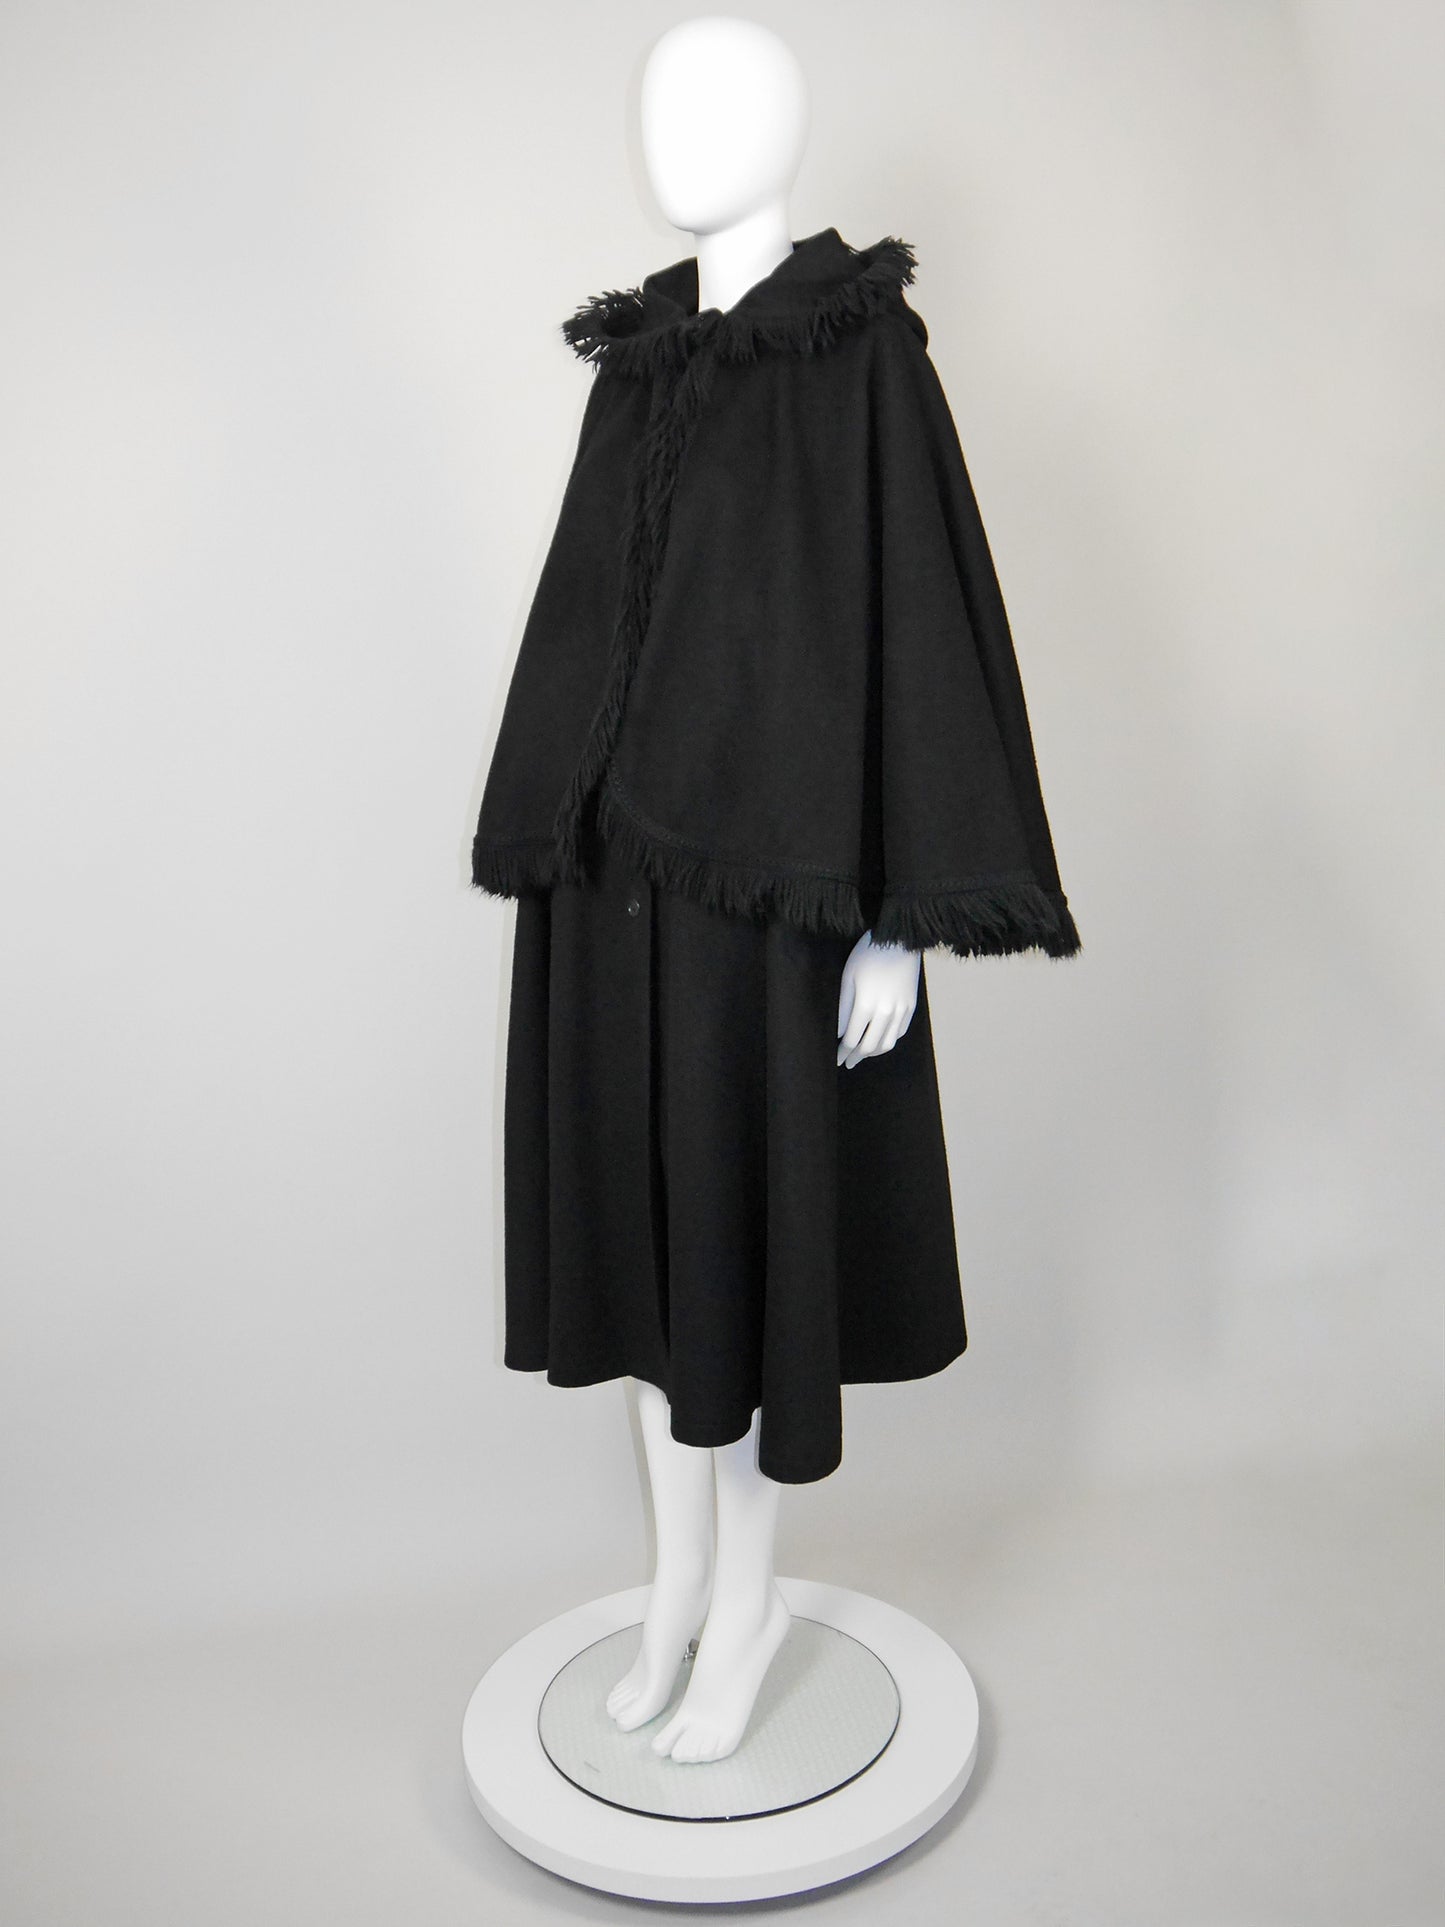 YVES SAINT LAURENT 1970s Vintage Fringed Hooded Wool Cape Coat Size S